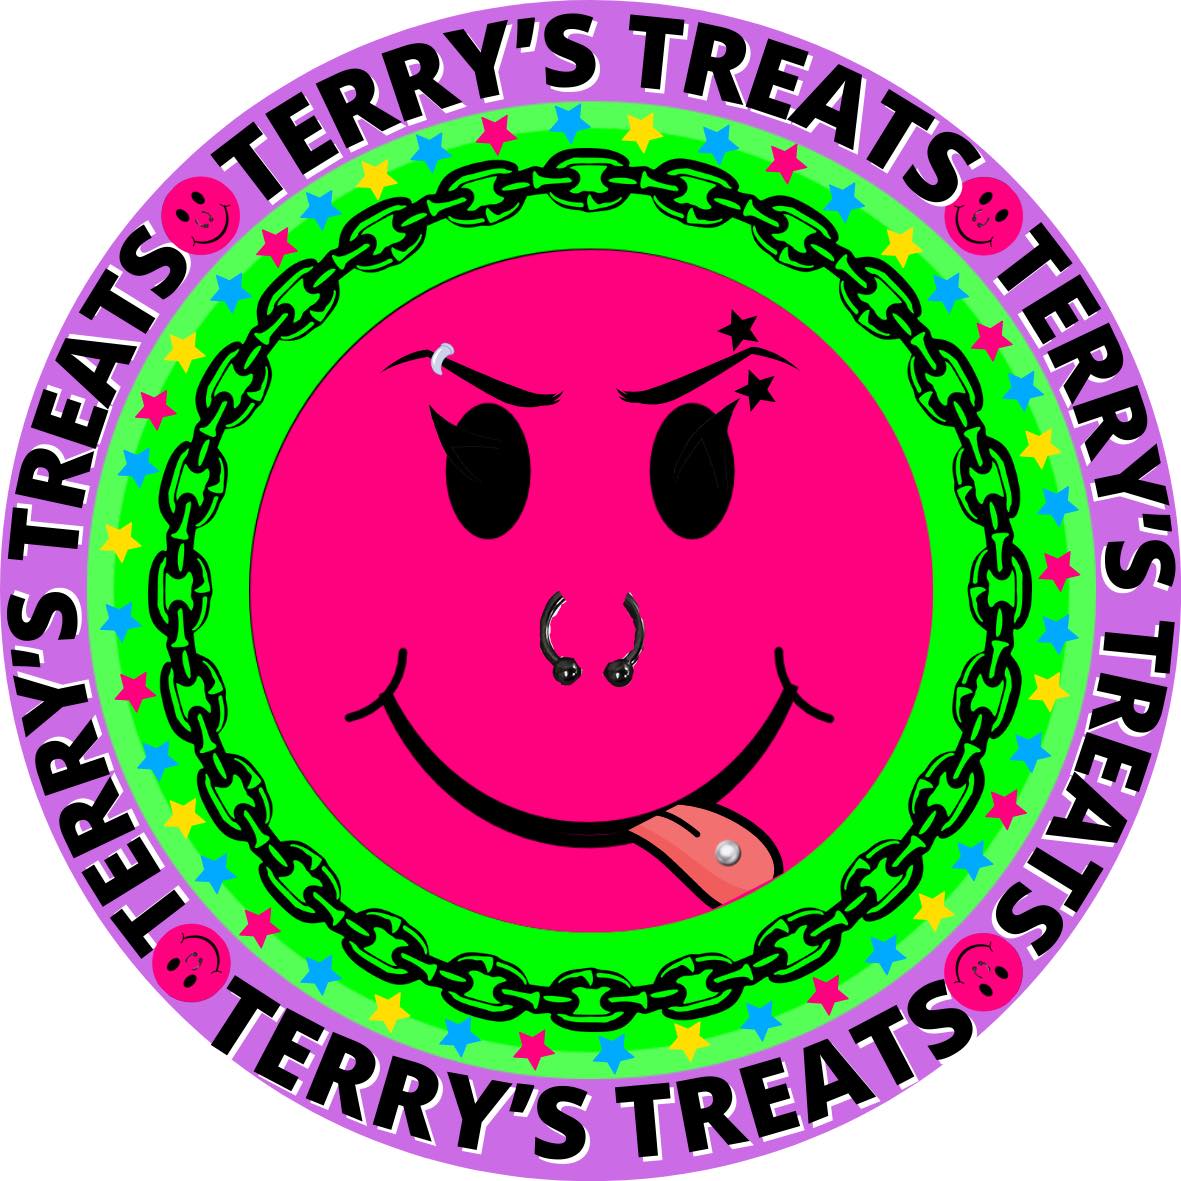 (c) Terrystreats.com